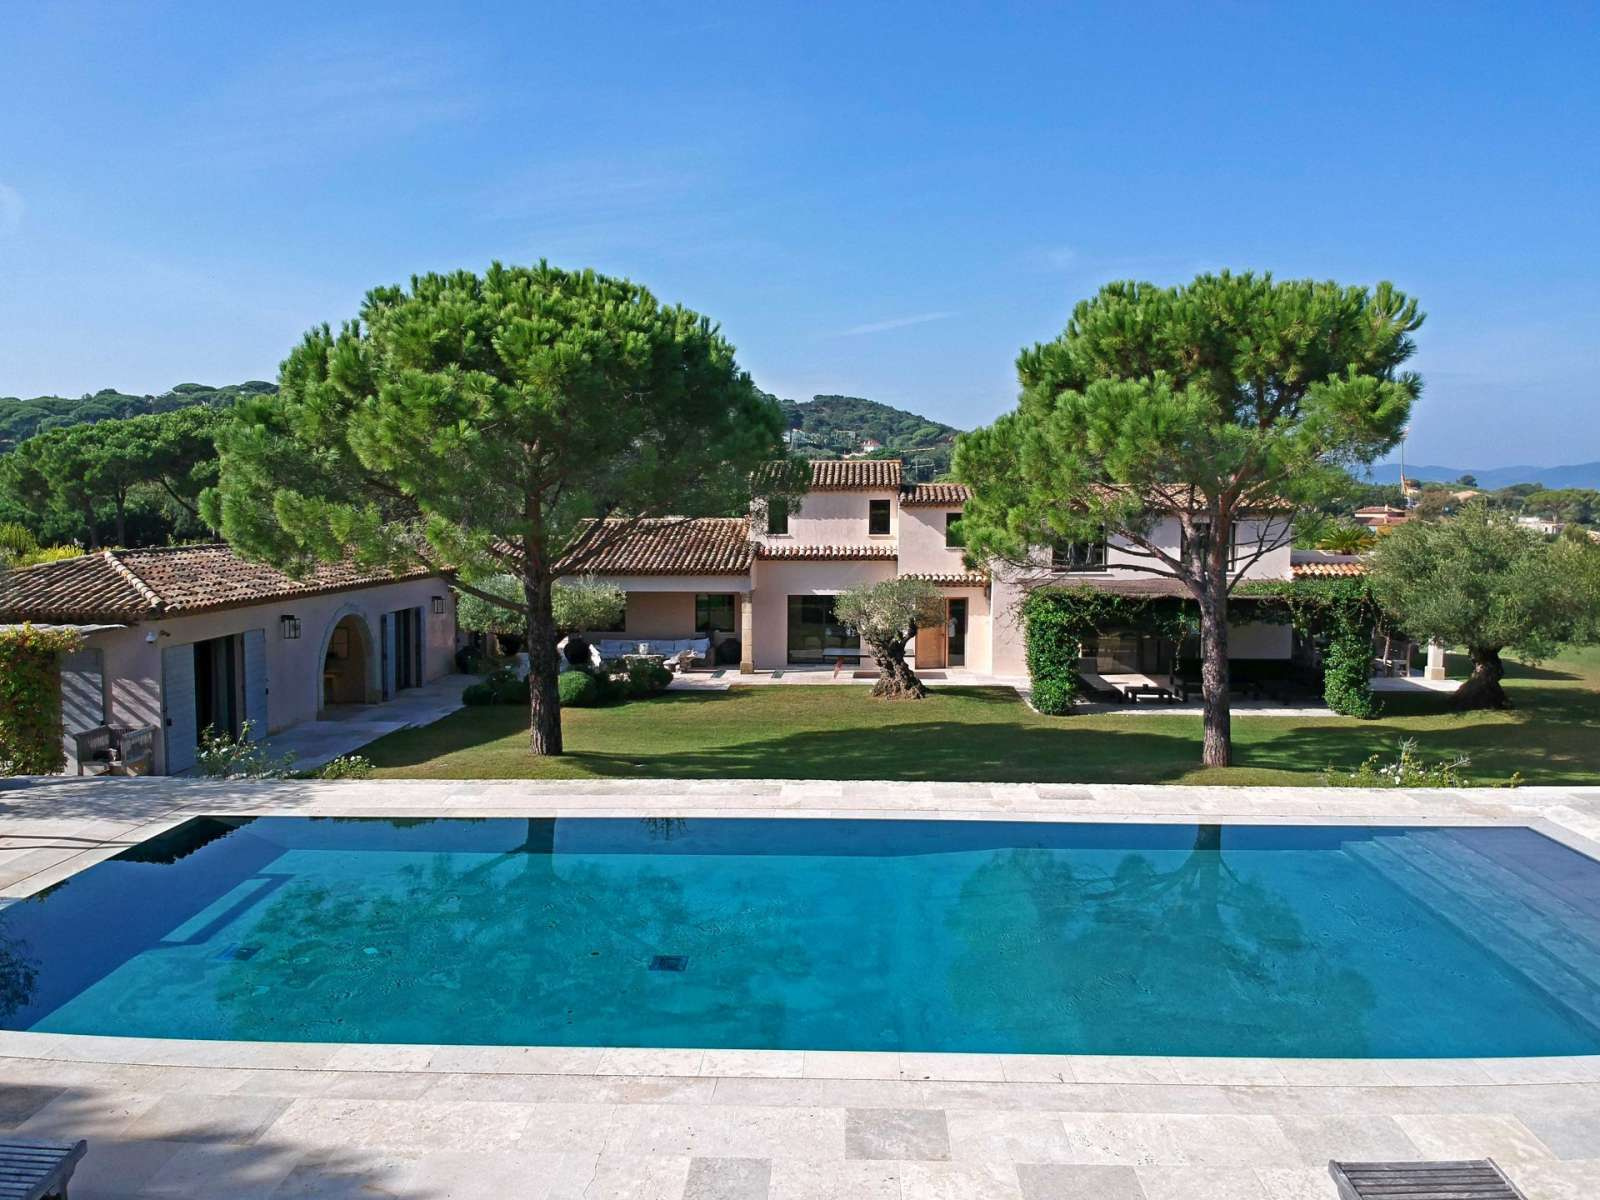 Rent modern luxury house in Saint-Tropez